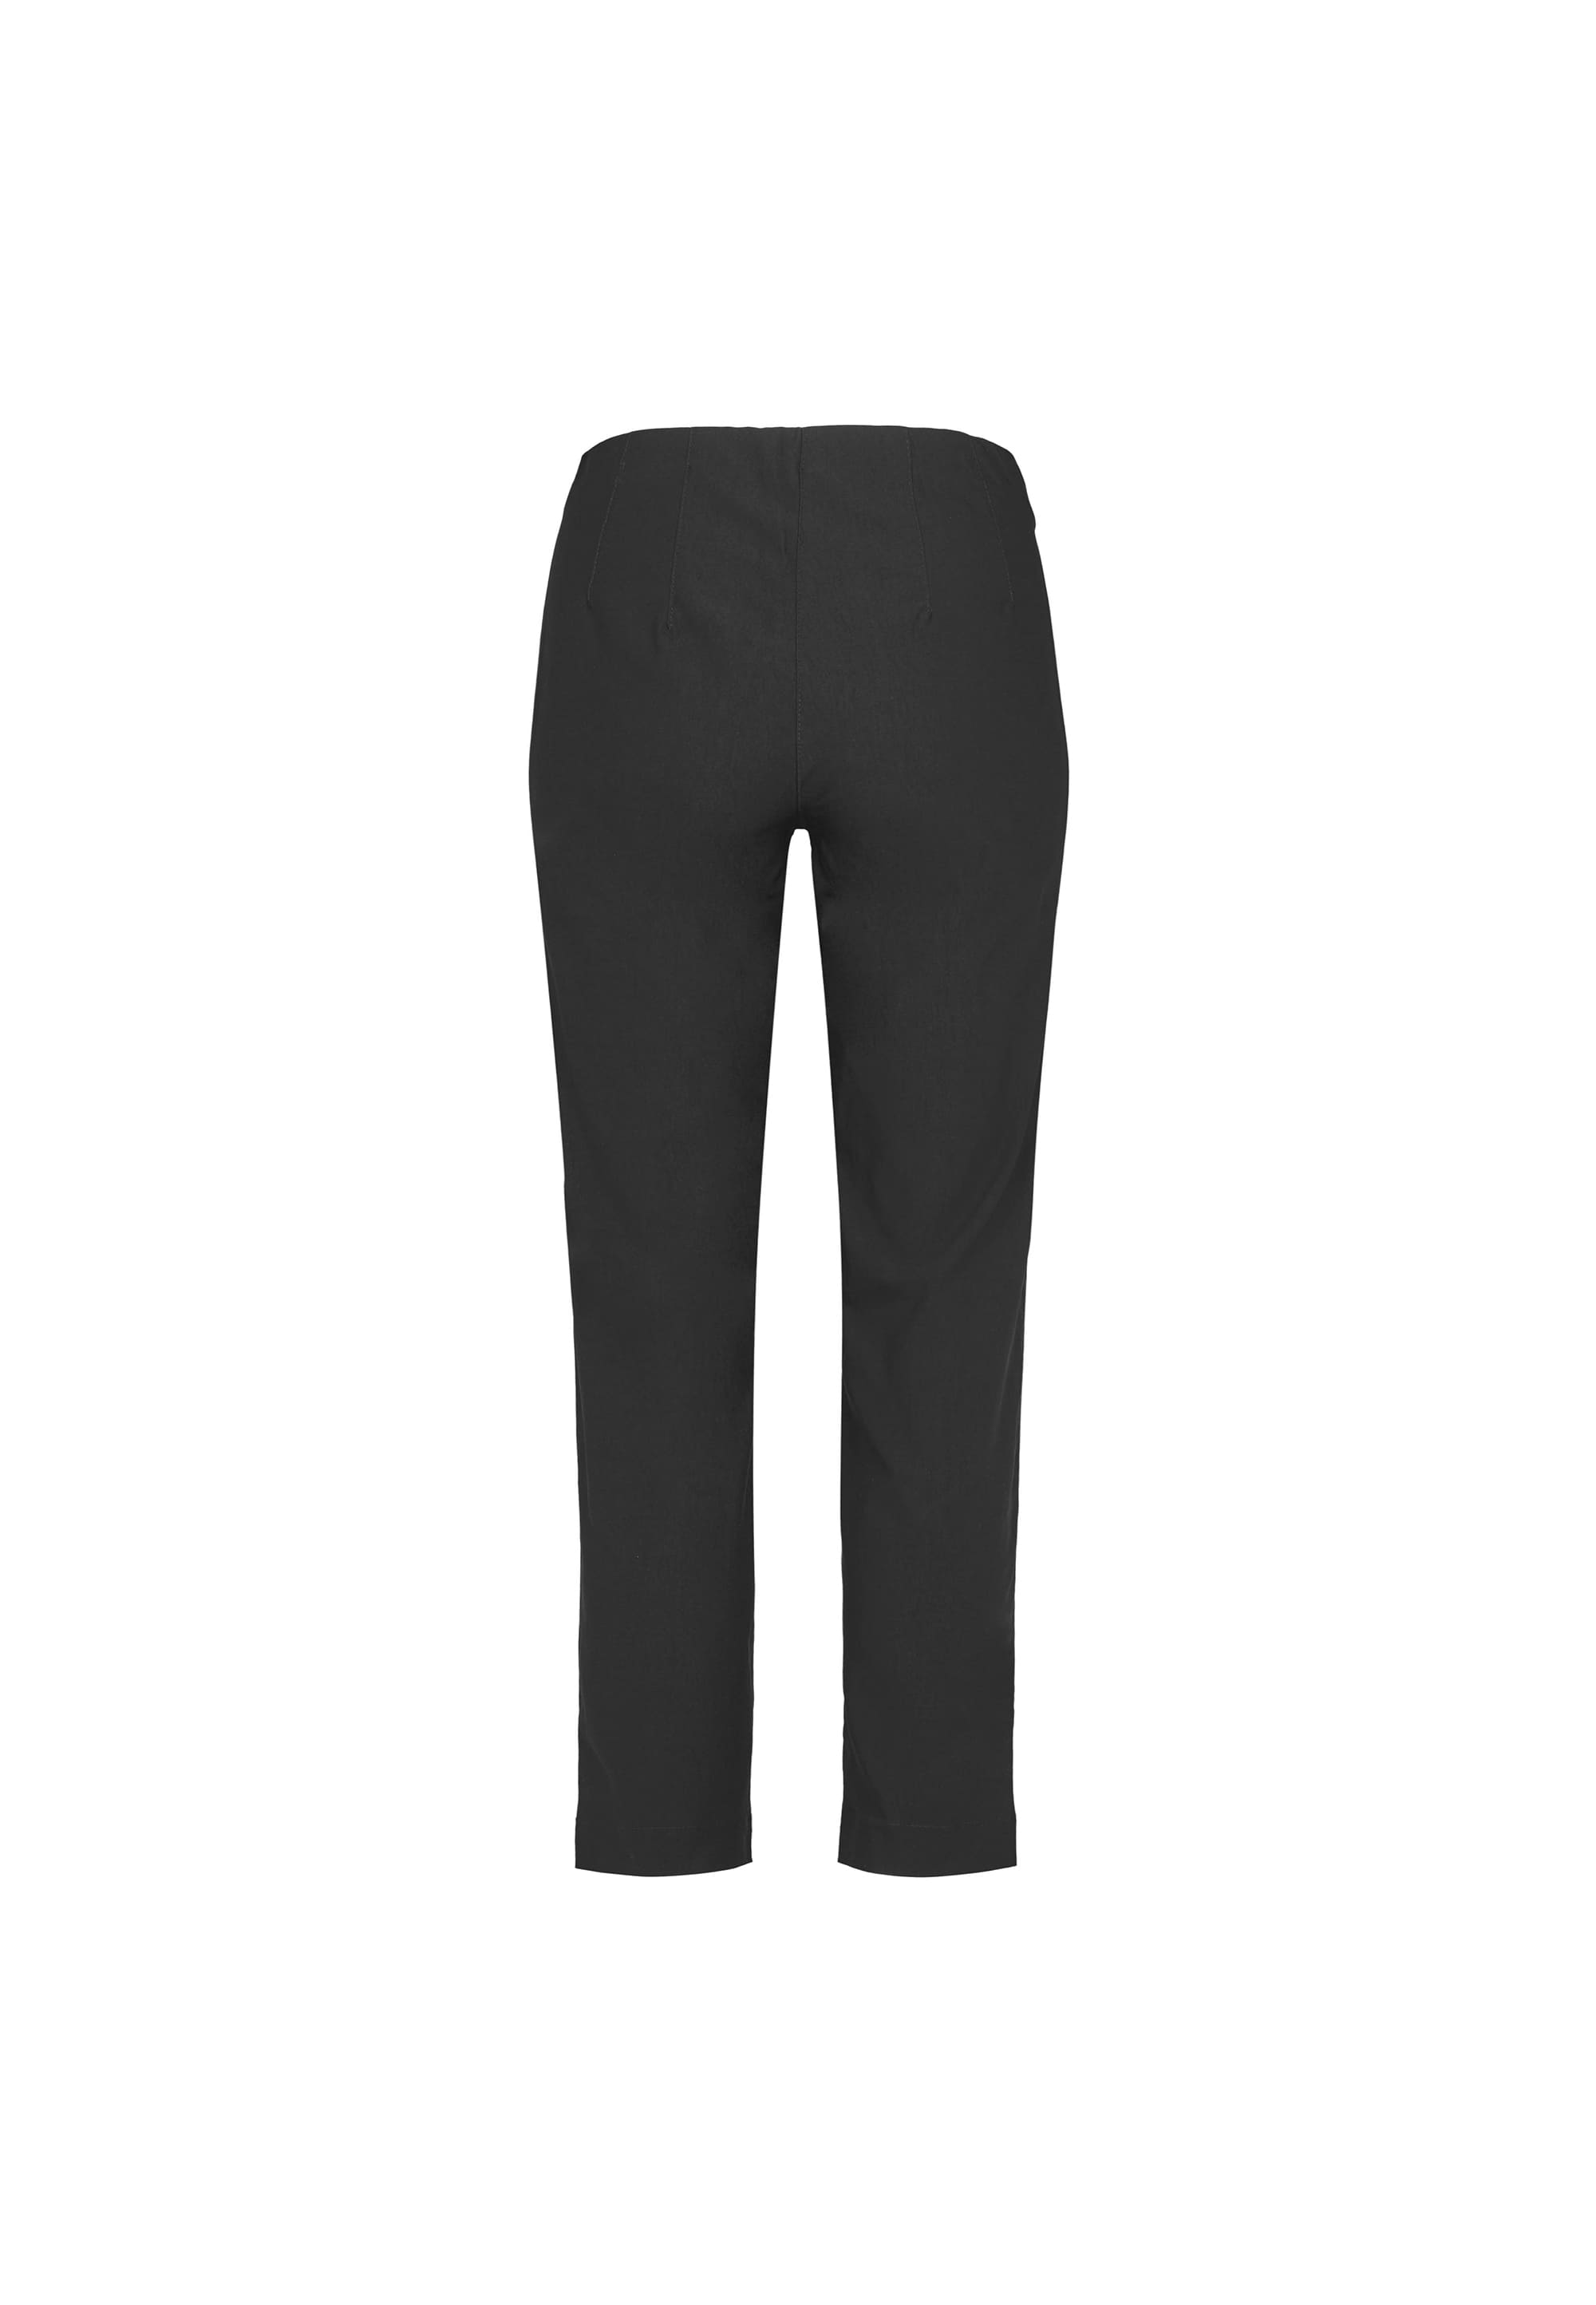 LAURIE Betty Regular - Medium Length Trousers REGULAR 99970 Black